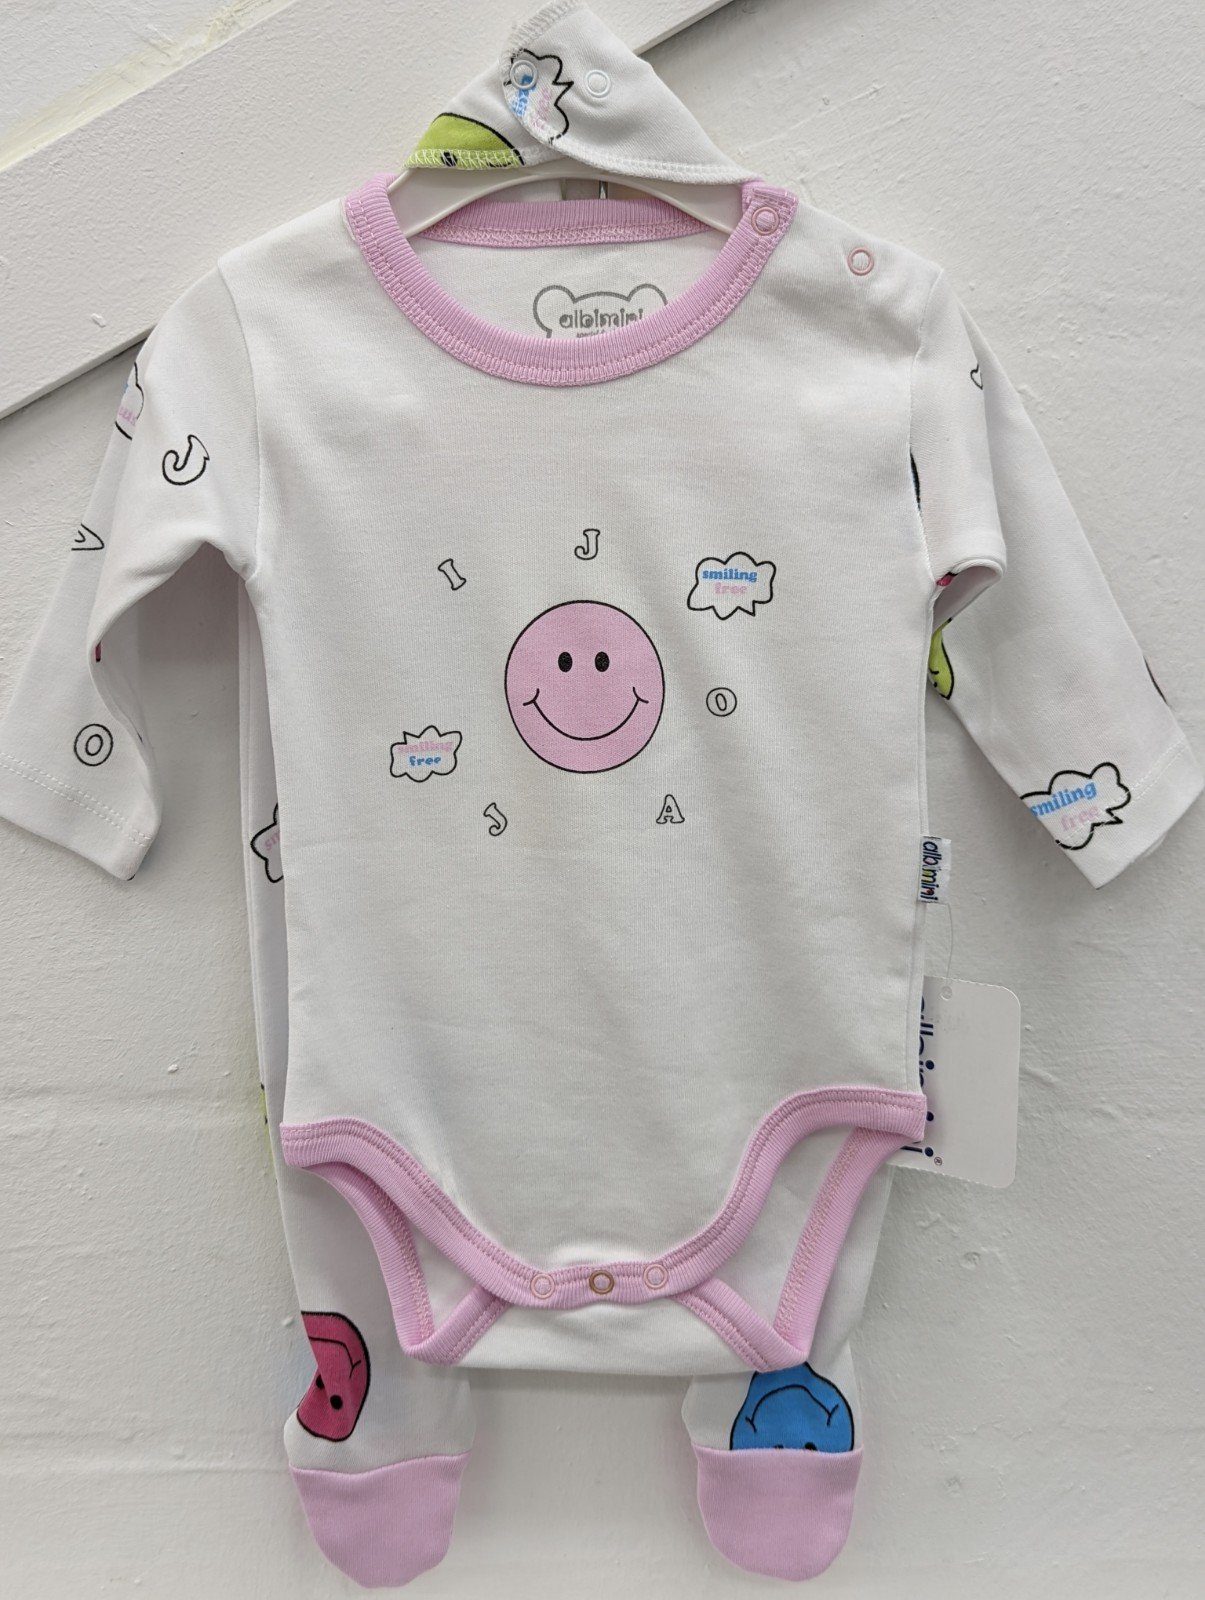 albimini Kinderanzug Baby Anzug 3-teilig Hose-Body/Overall-Tuch Pink